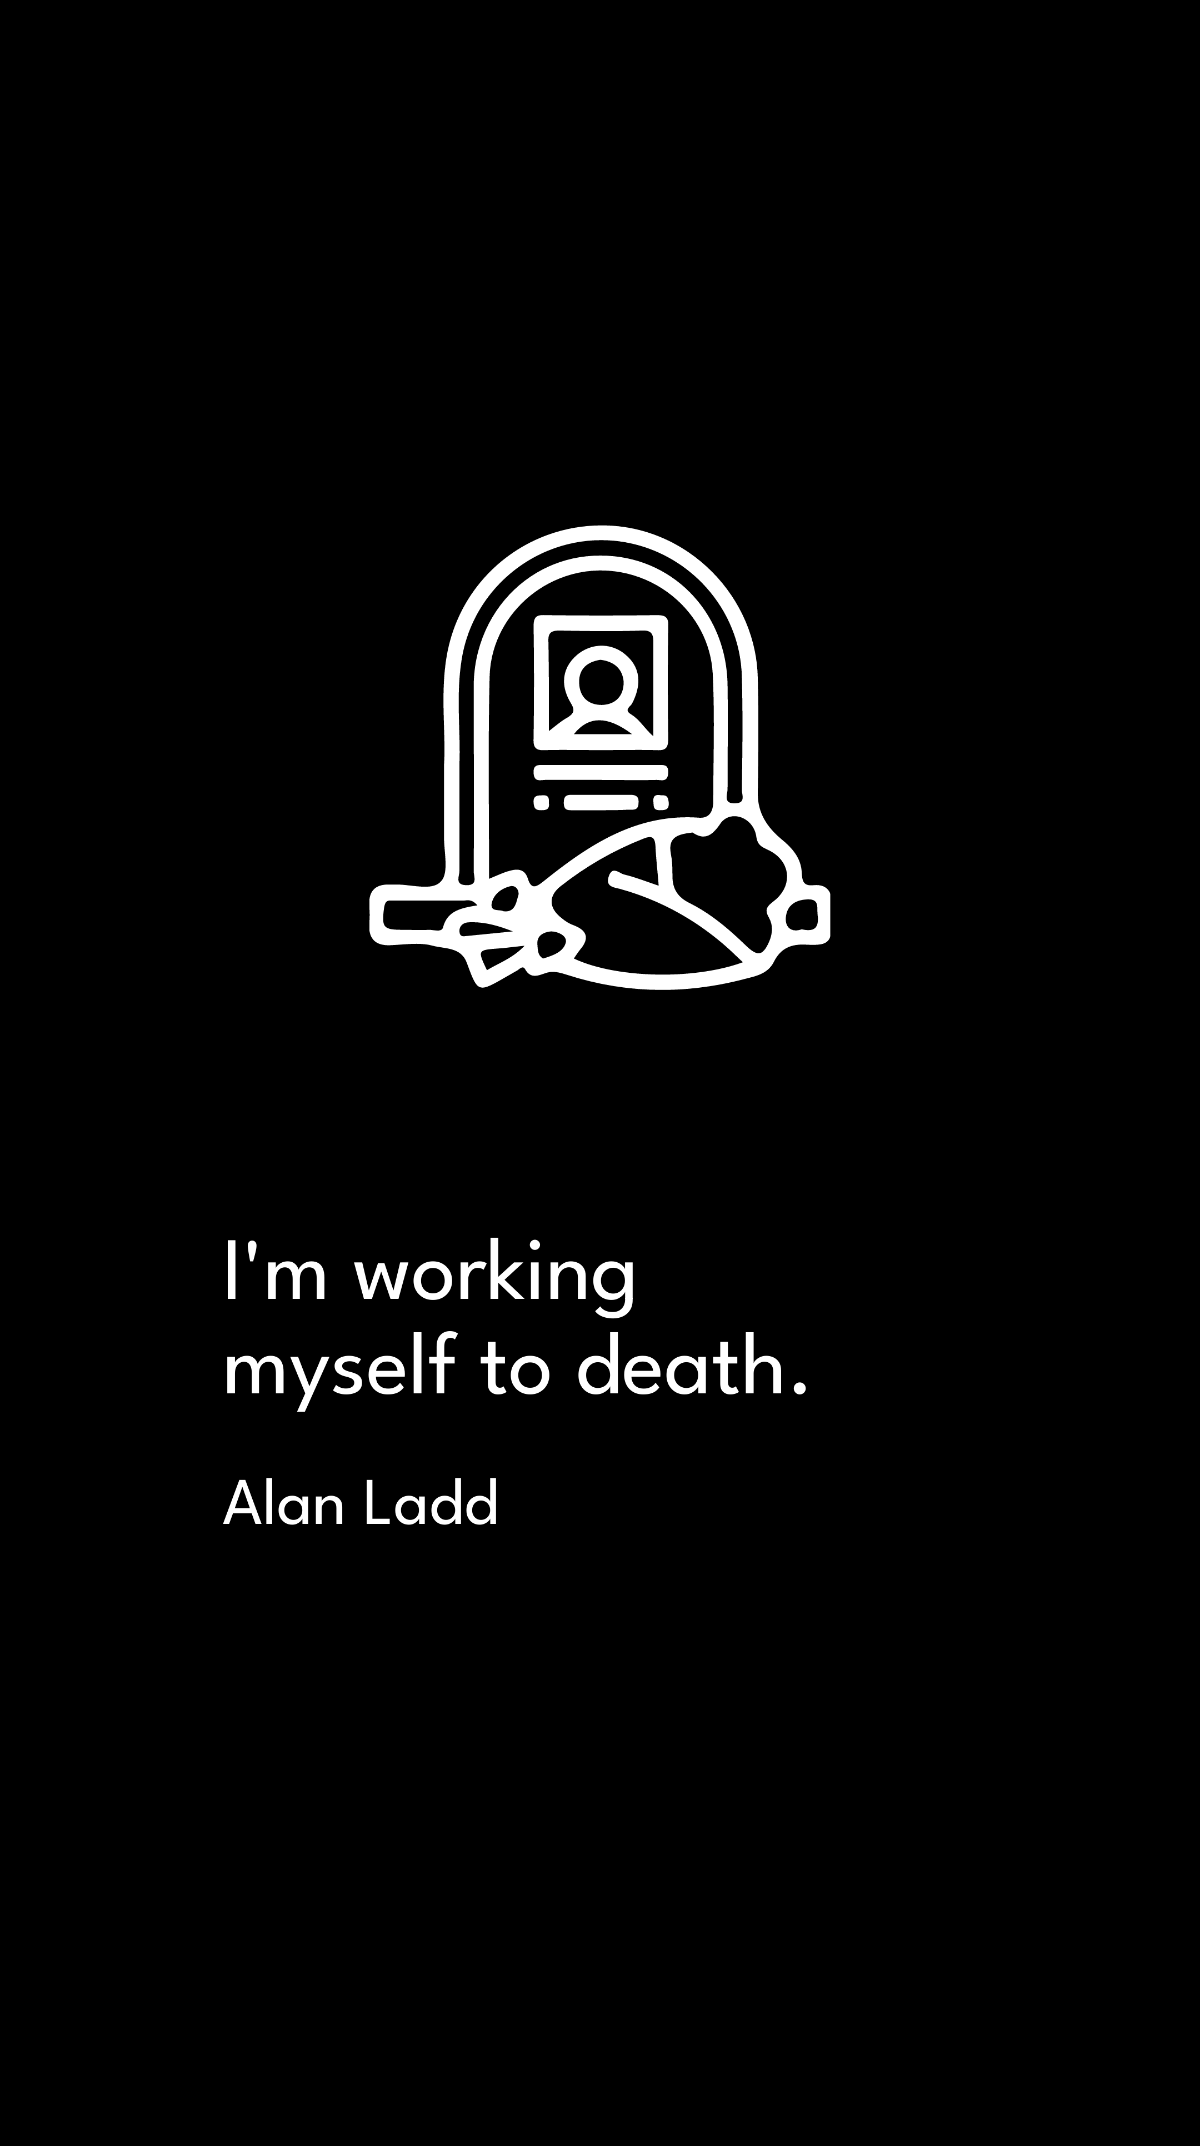 Alan Ladd - I'm working myself to death.